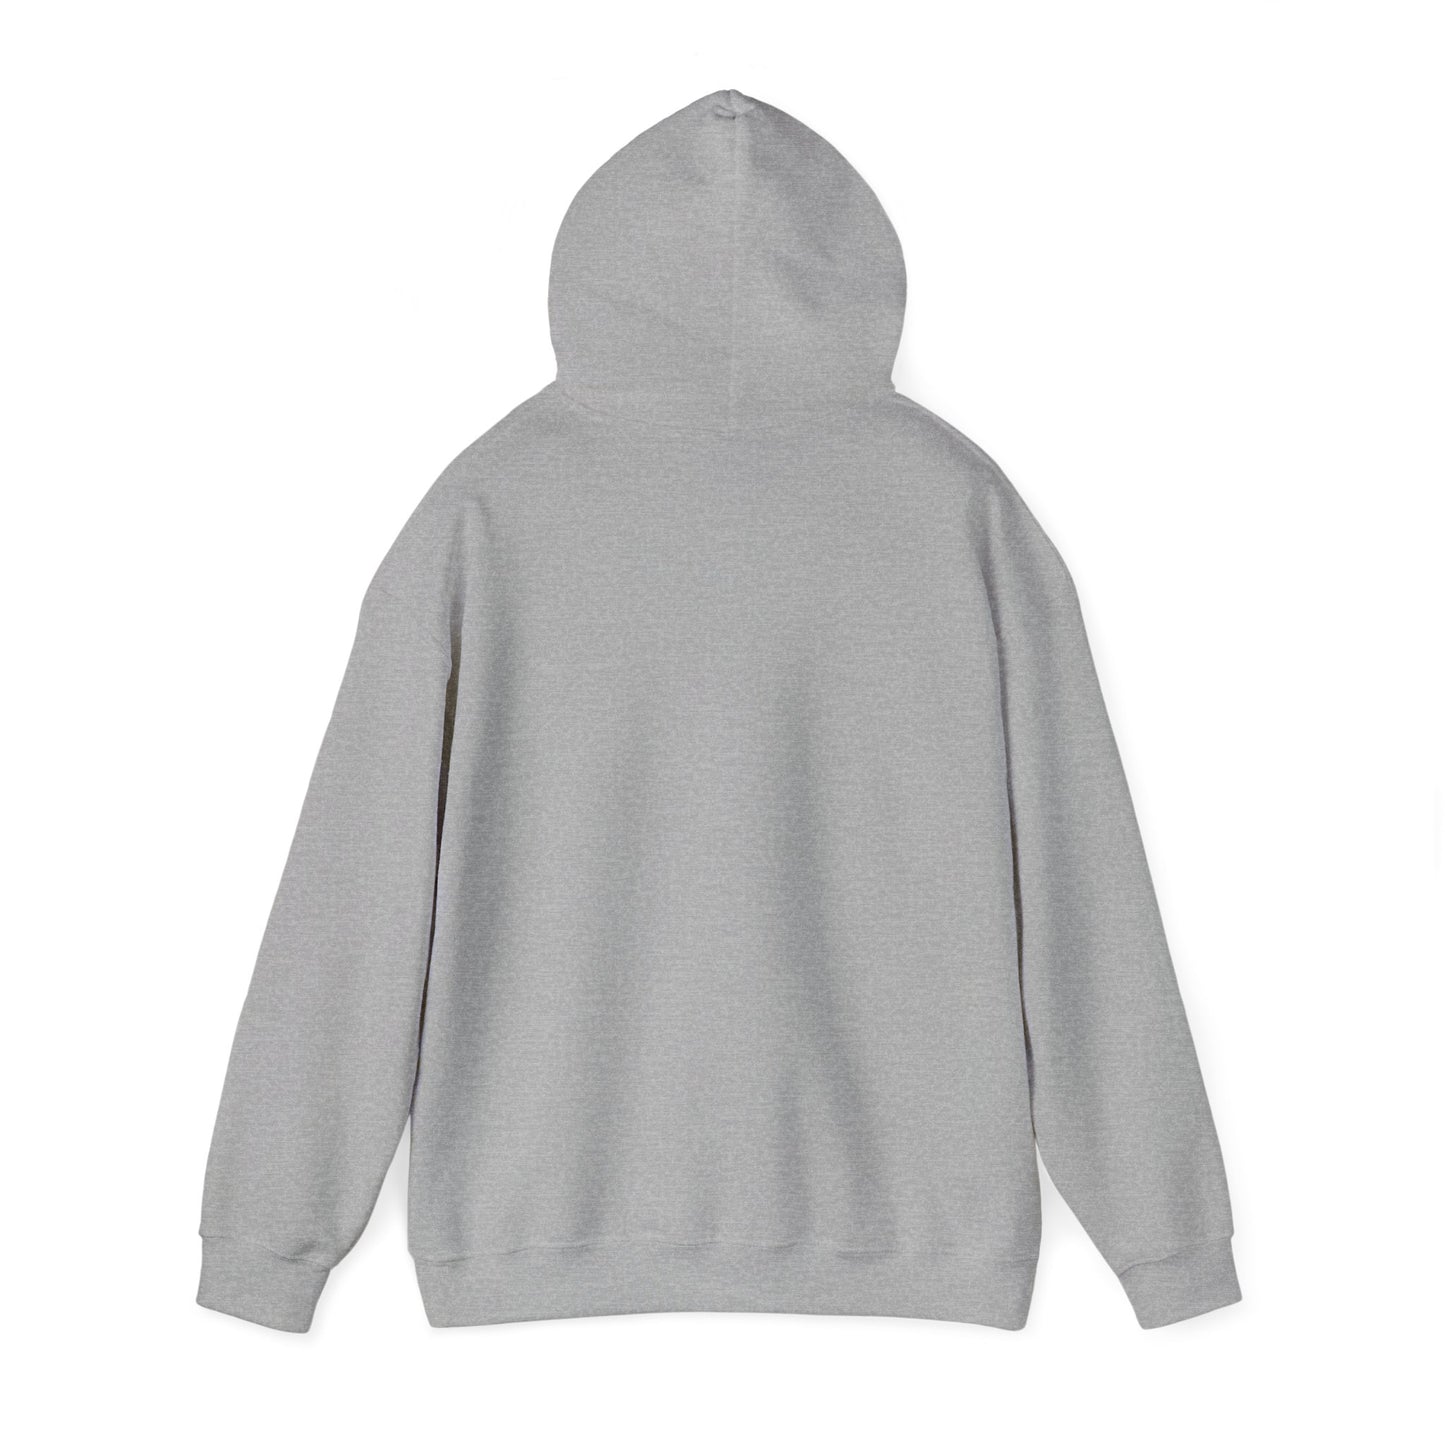 Financially Retarded - Hooded Sweatshirt